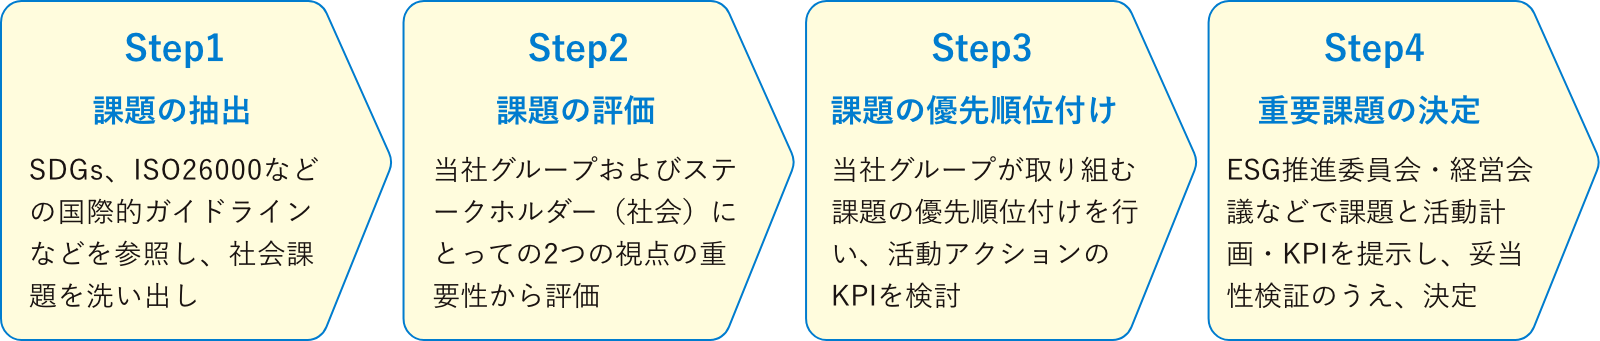 STEP1 課題の抽出 STEP2 課題の評価 STEP3 課題の優先順位付け STEP4 重要課題の決定